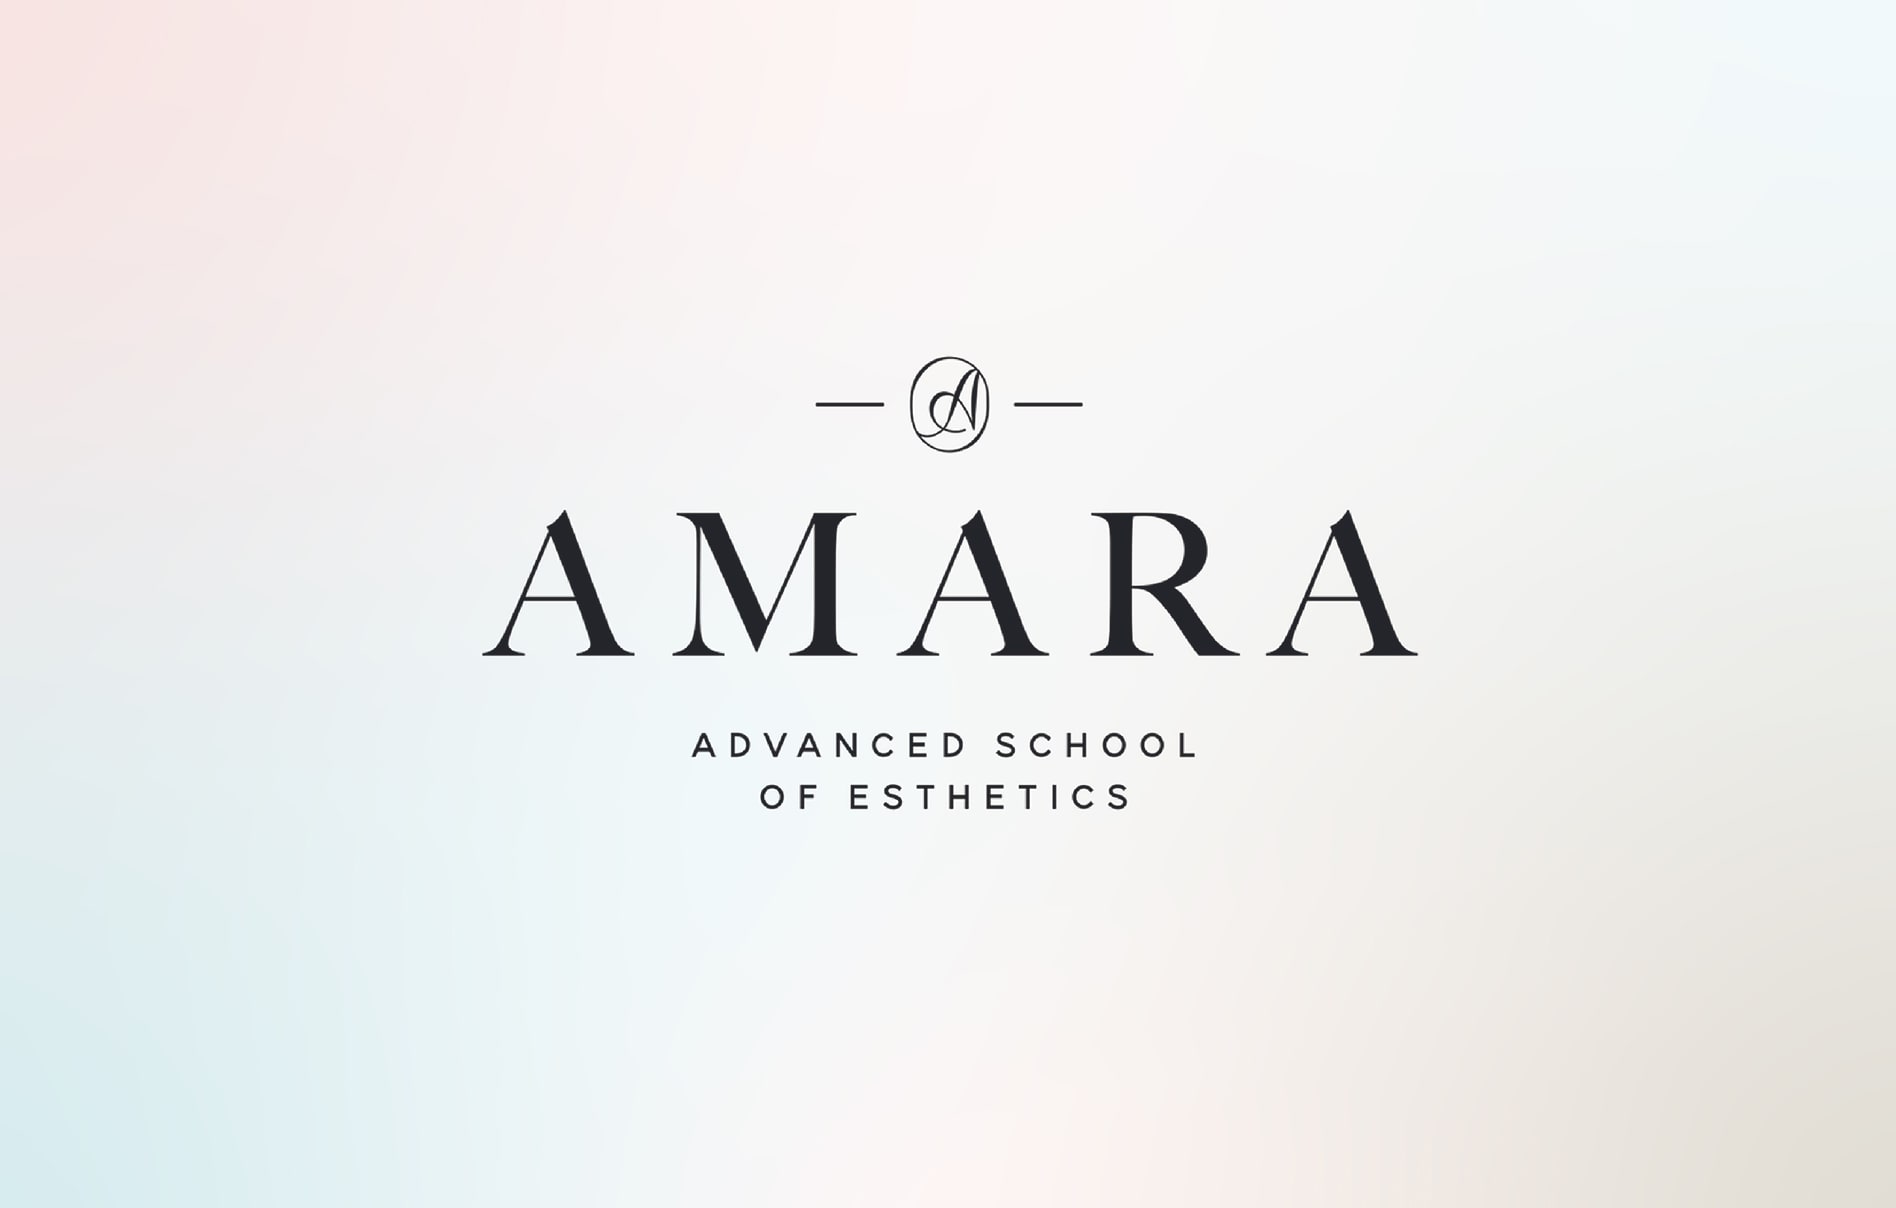 Amara Advanced School of Esthetics